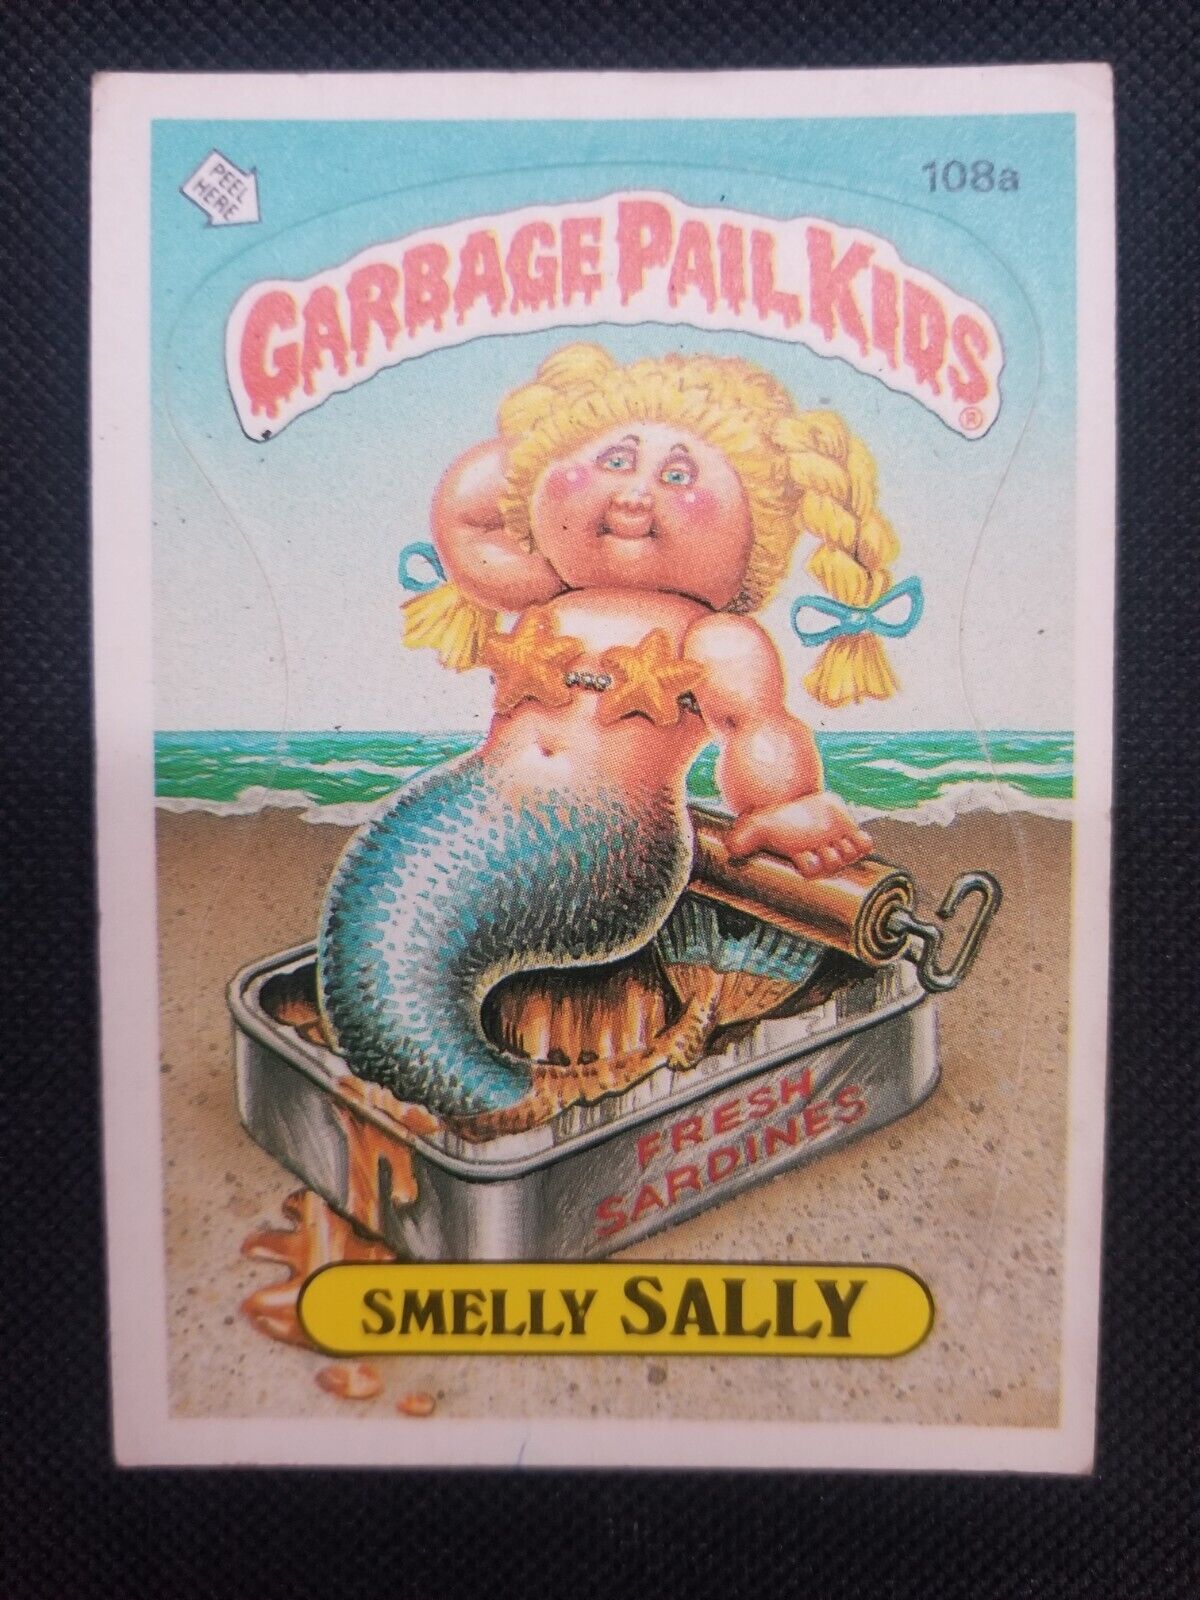 1986 Topps Garbage Pail Kids Original 3rd Series Card #108a SMELLY SALLY Vintage